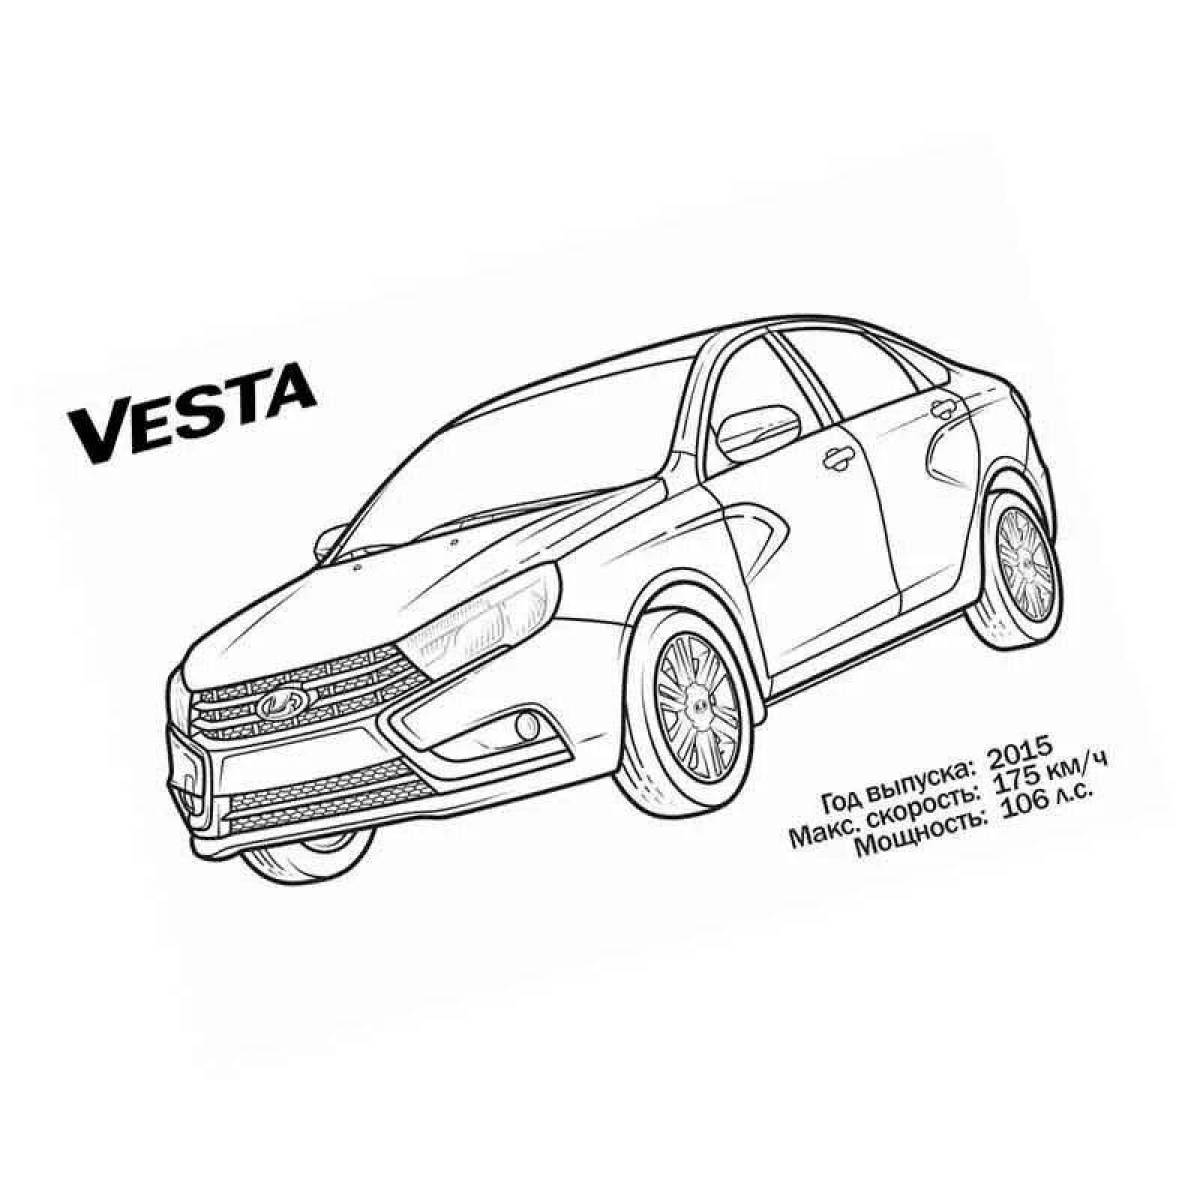 Vesta charming coloring book